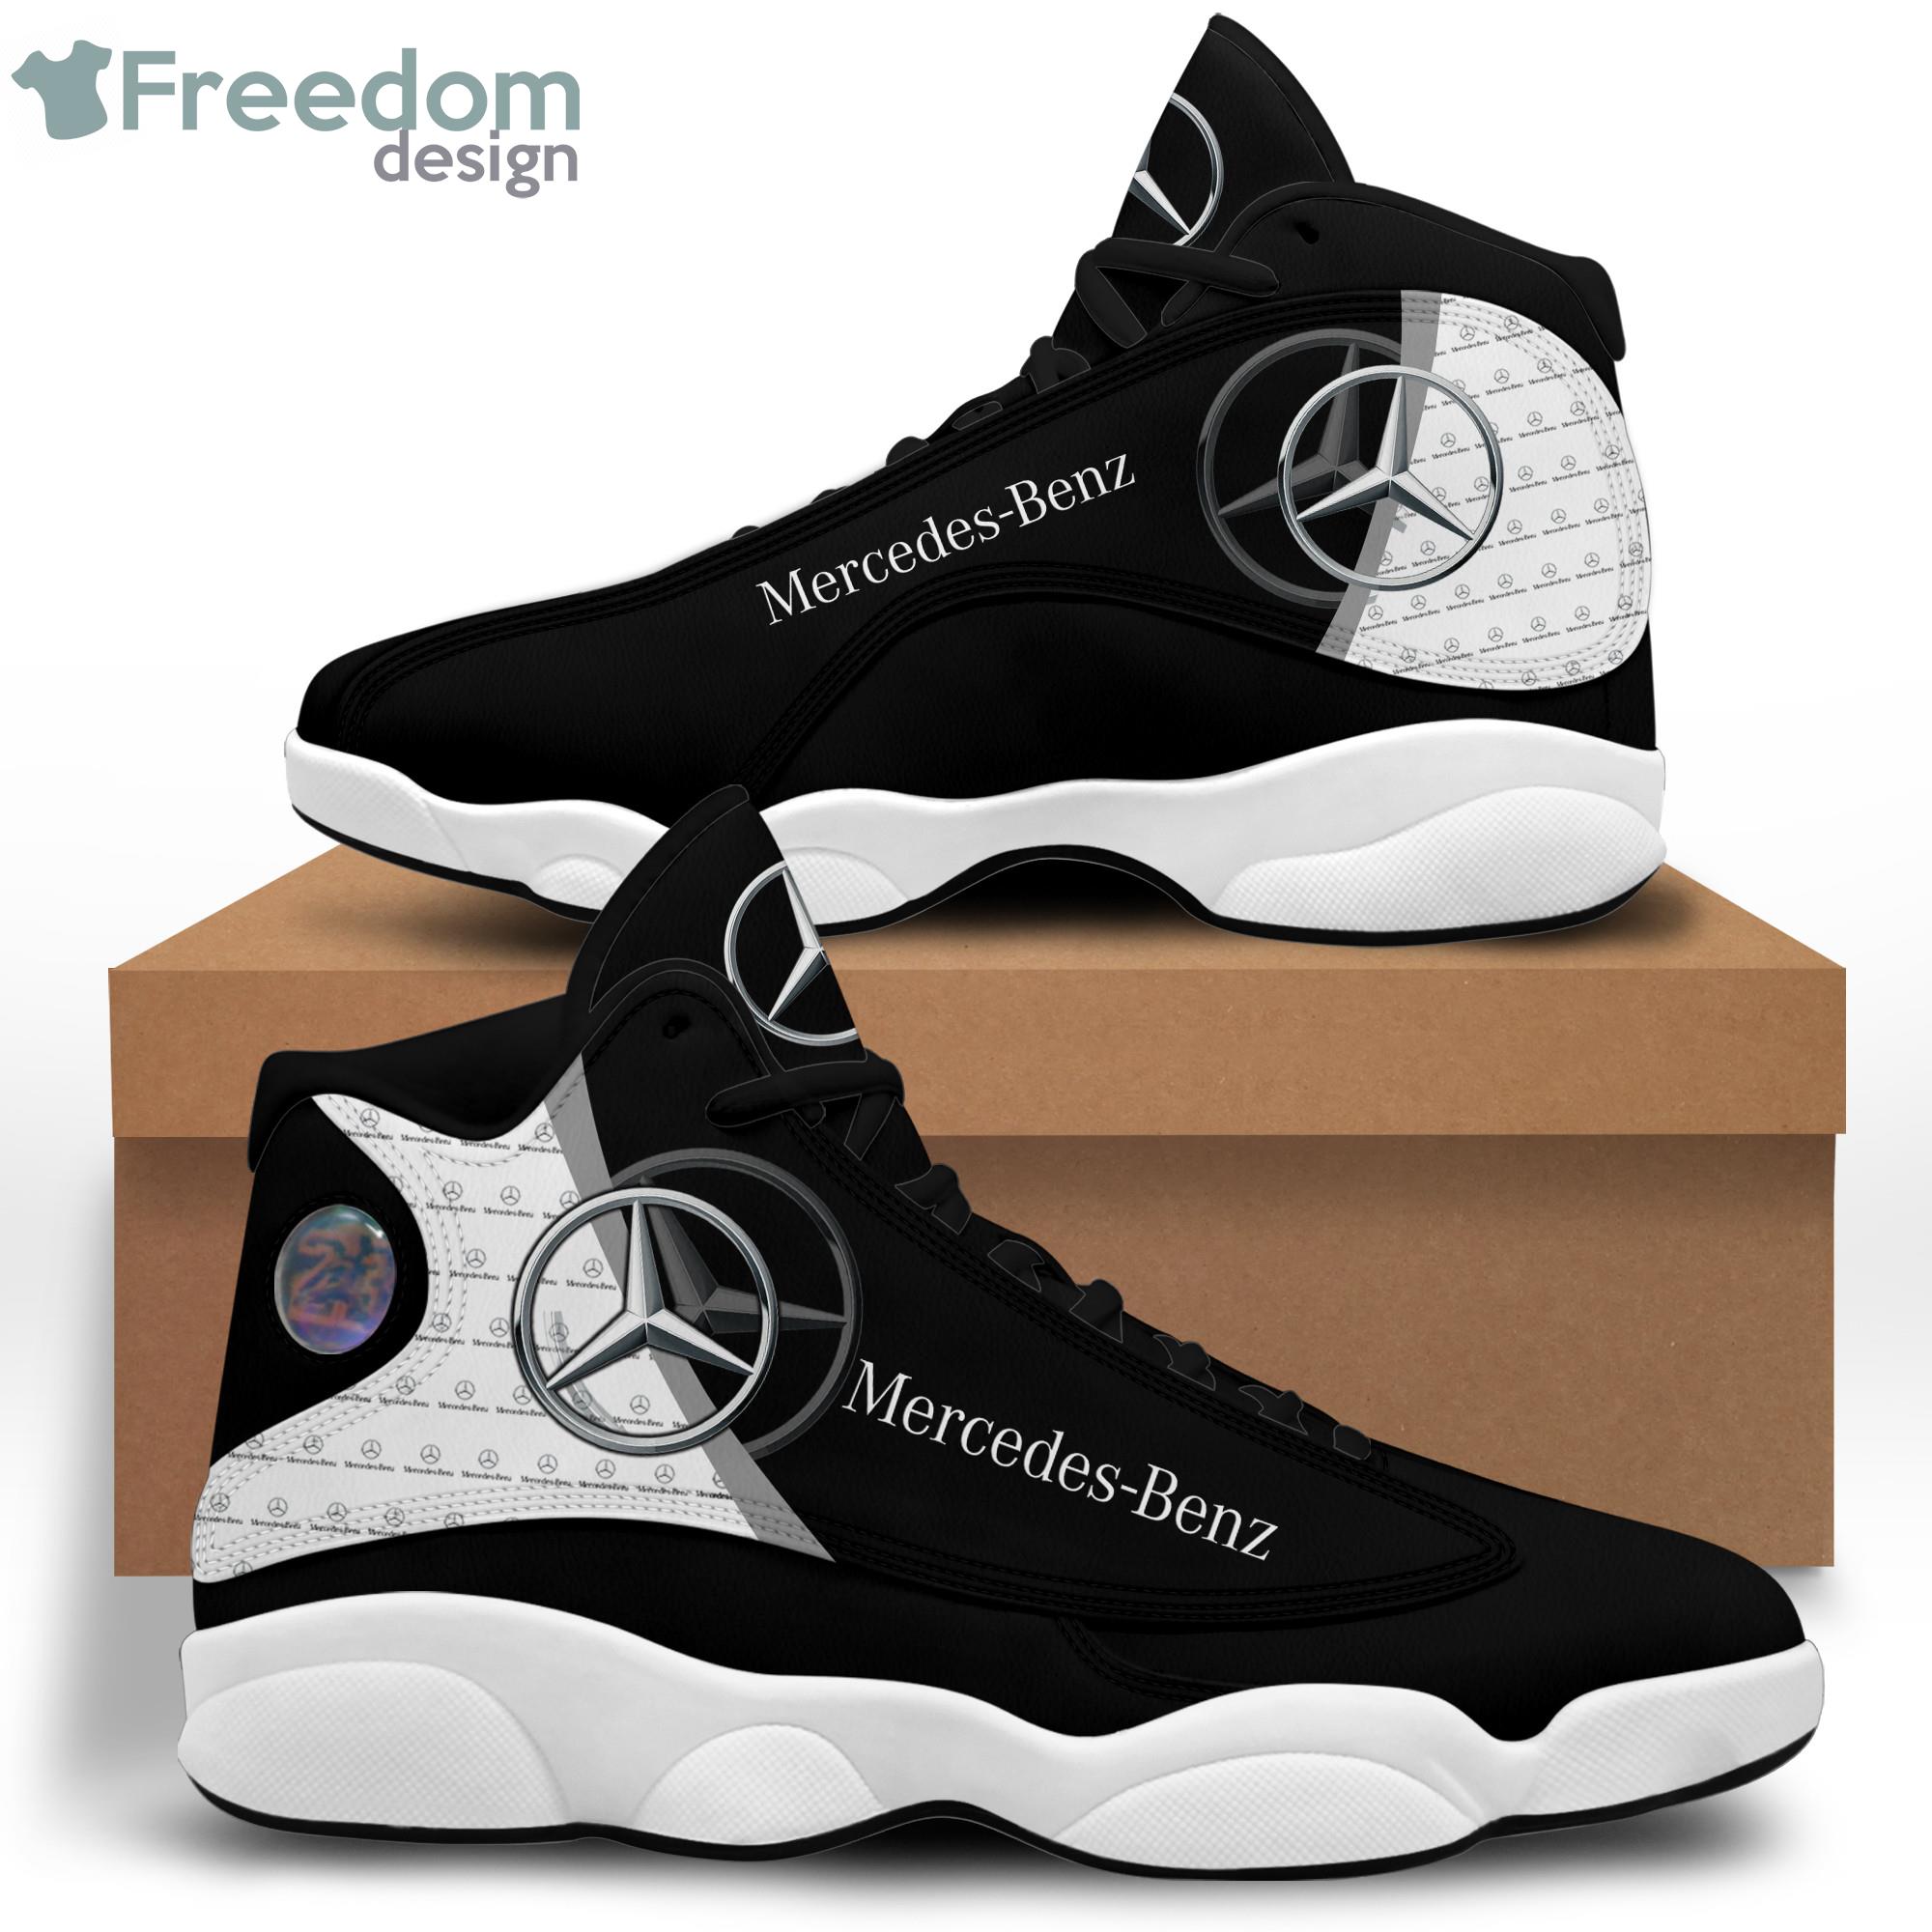 Mercedes-Benz Air Jordan 13 Shoes - Freedomdesign